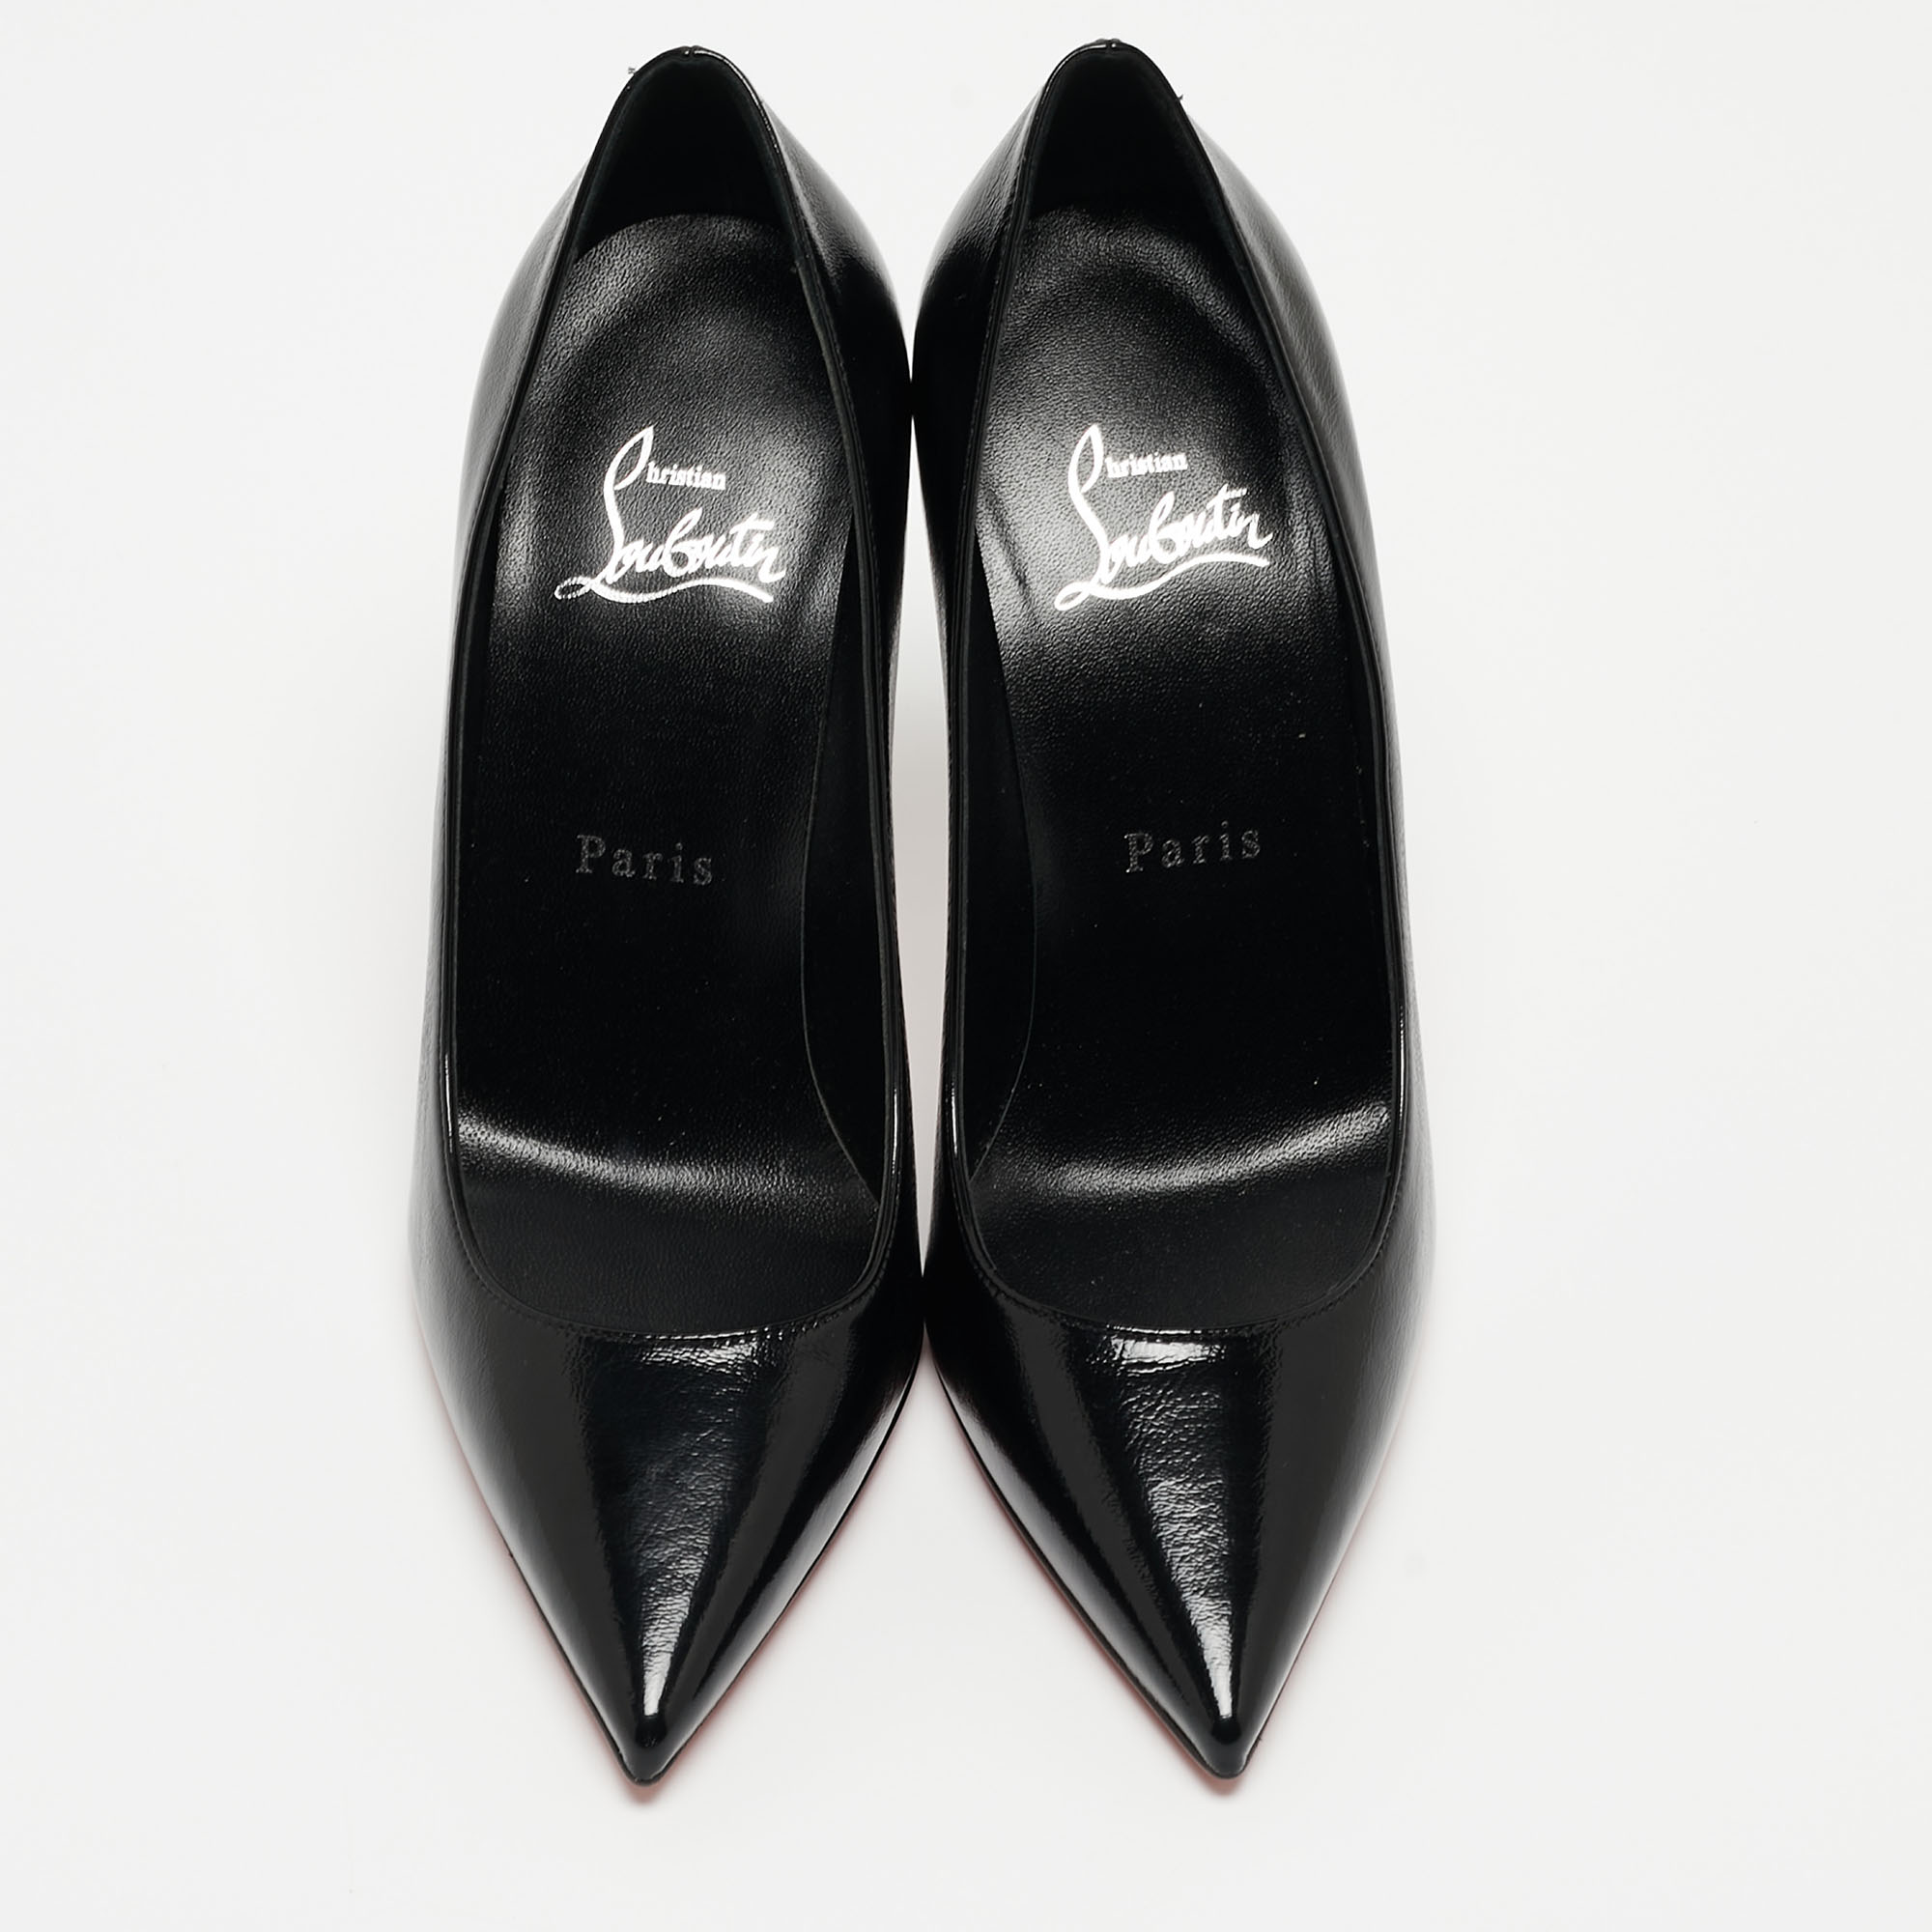 Christian Louboutin Black Patent Leather So Kate Pumps Size 36